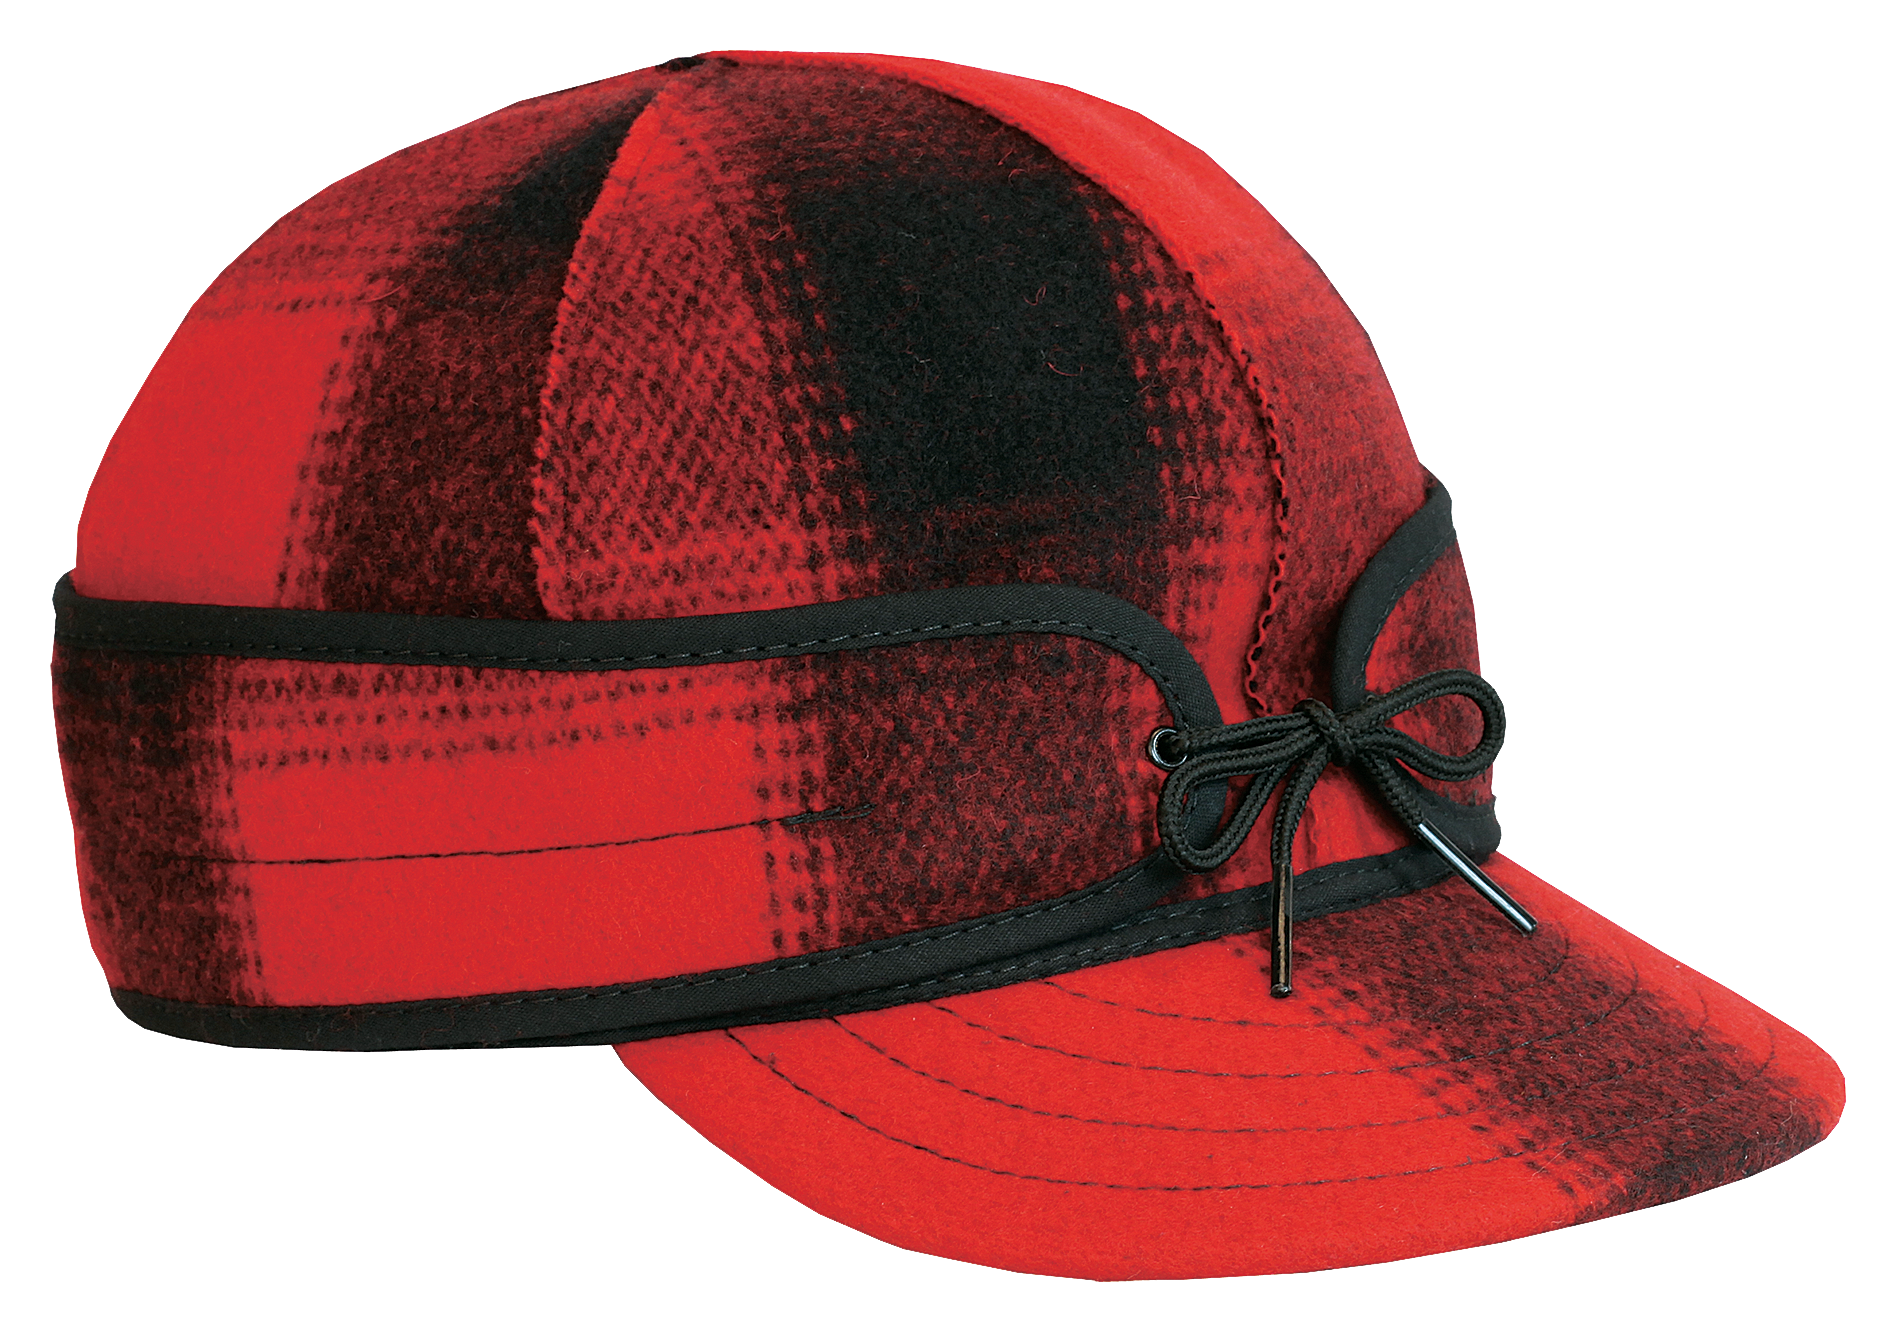 Stormy Kromer The Mackinaw Cap - Red/Black - 7-1/4